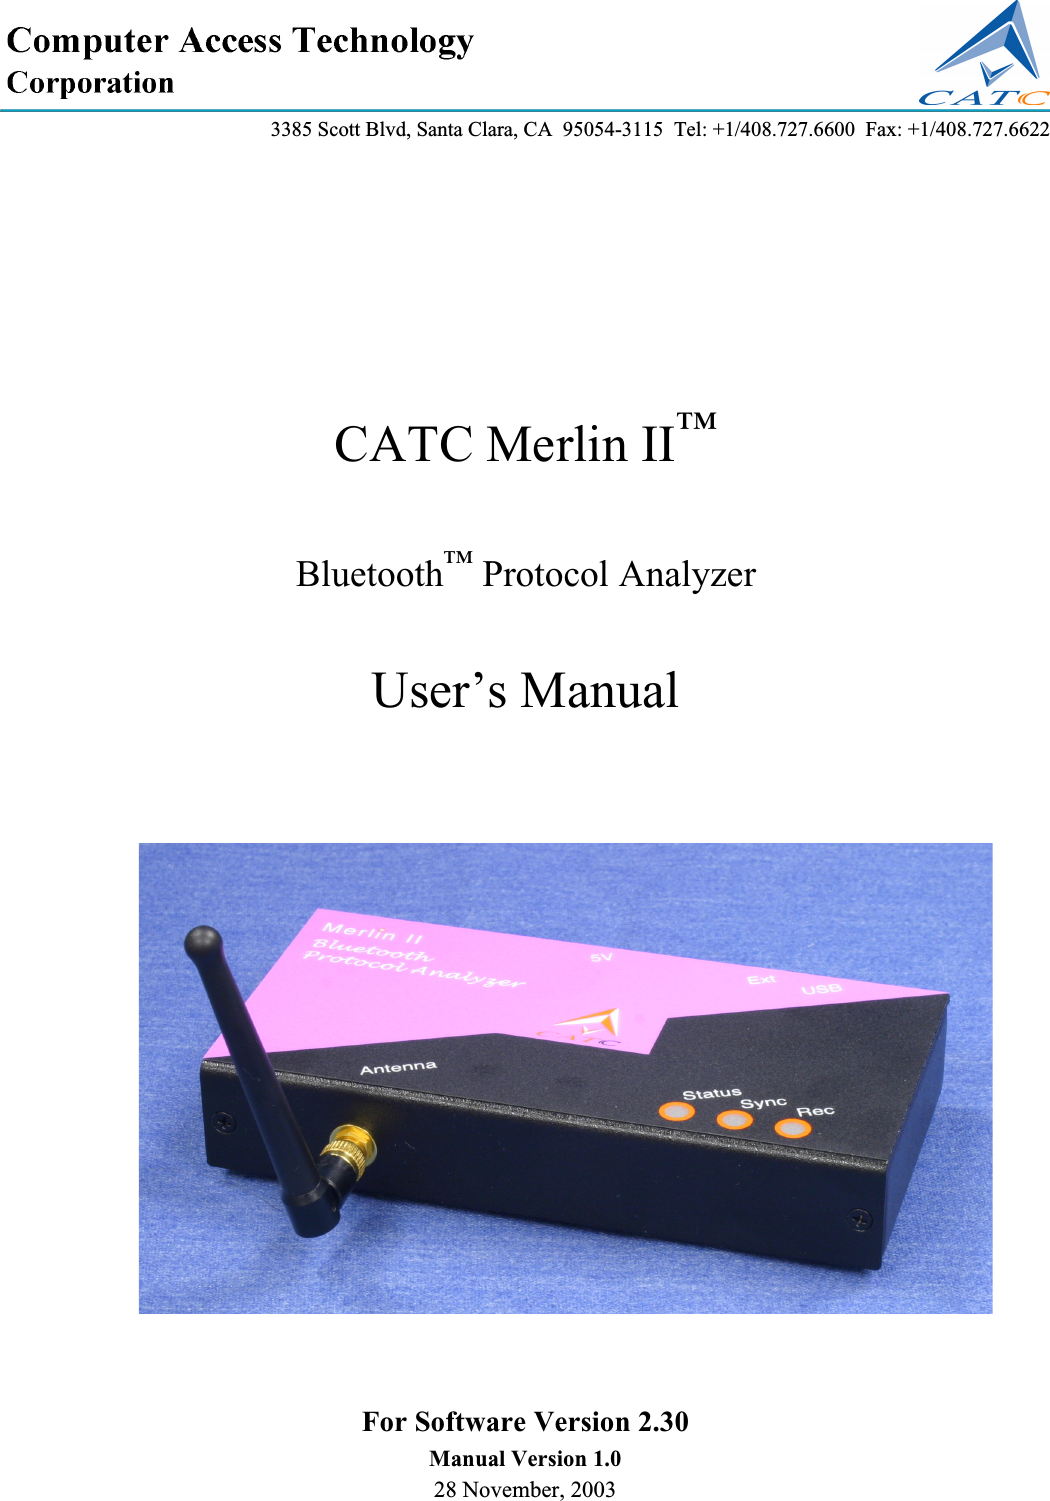 3385 Scott Blvd, Santa Clara, CA  95054-3115  Tel: +1/408.727.6600  Fax: +1/408.727.6622For Software Version 2.30Manual Version 1.028 November, 2003CATC Merlin II™Bluetooth™ Protocol AnalyzerUser’s Manual